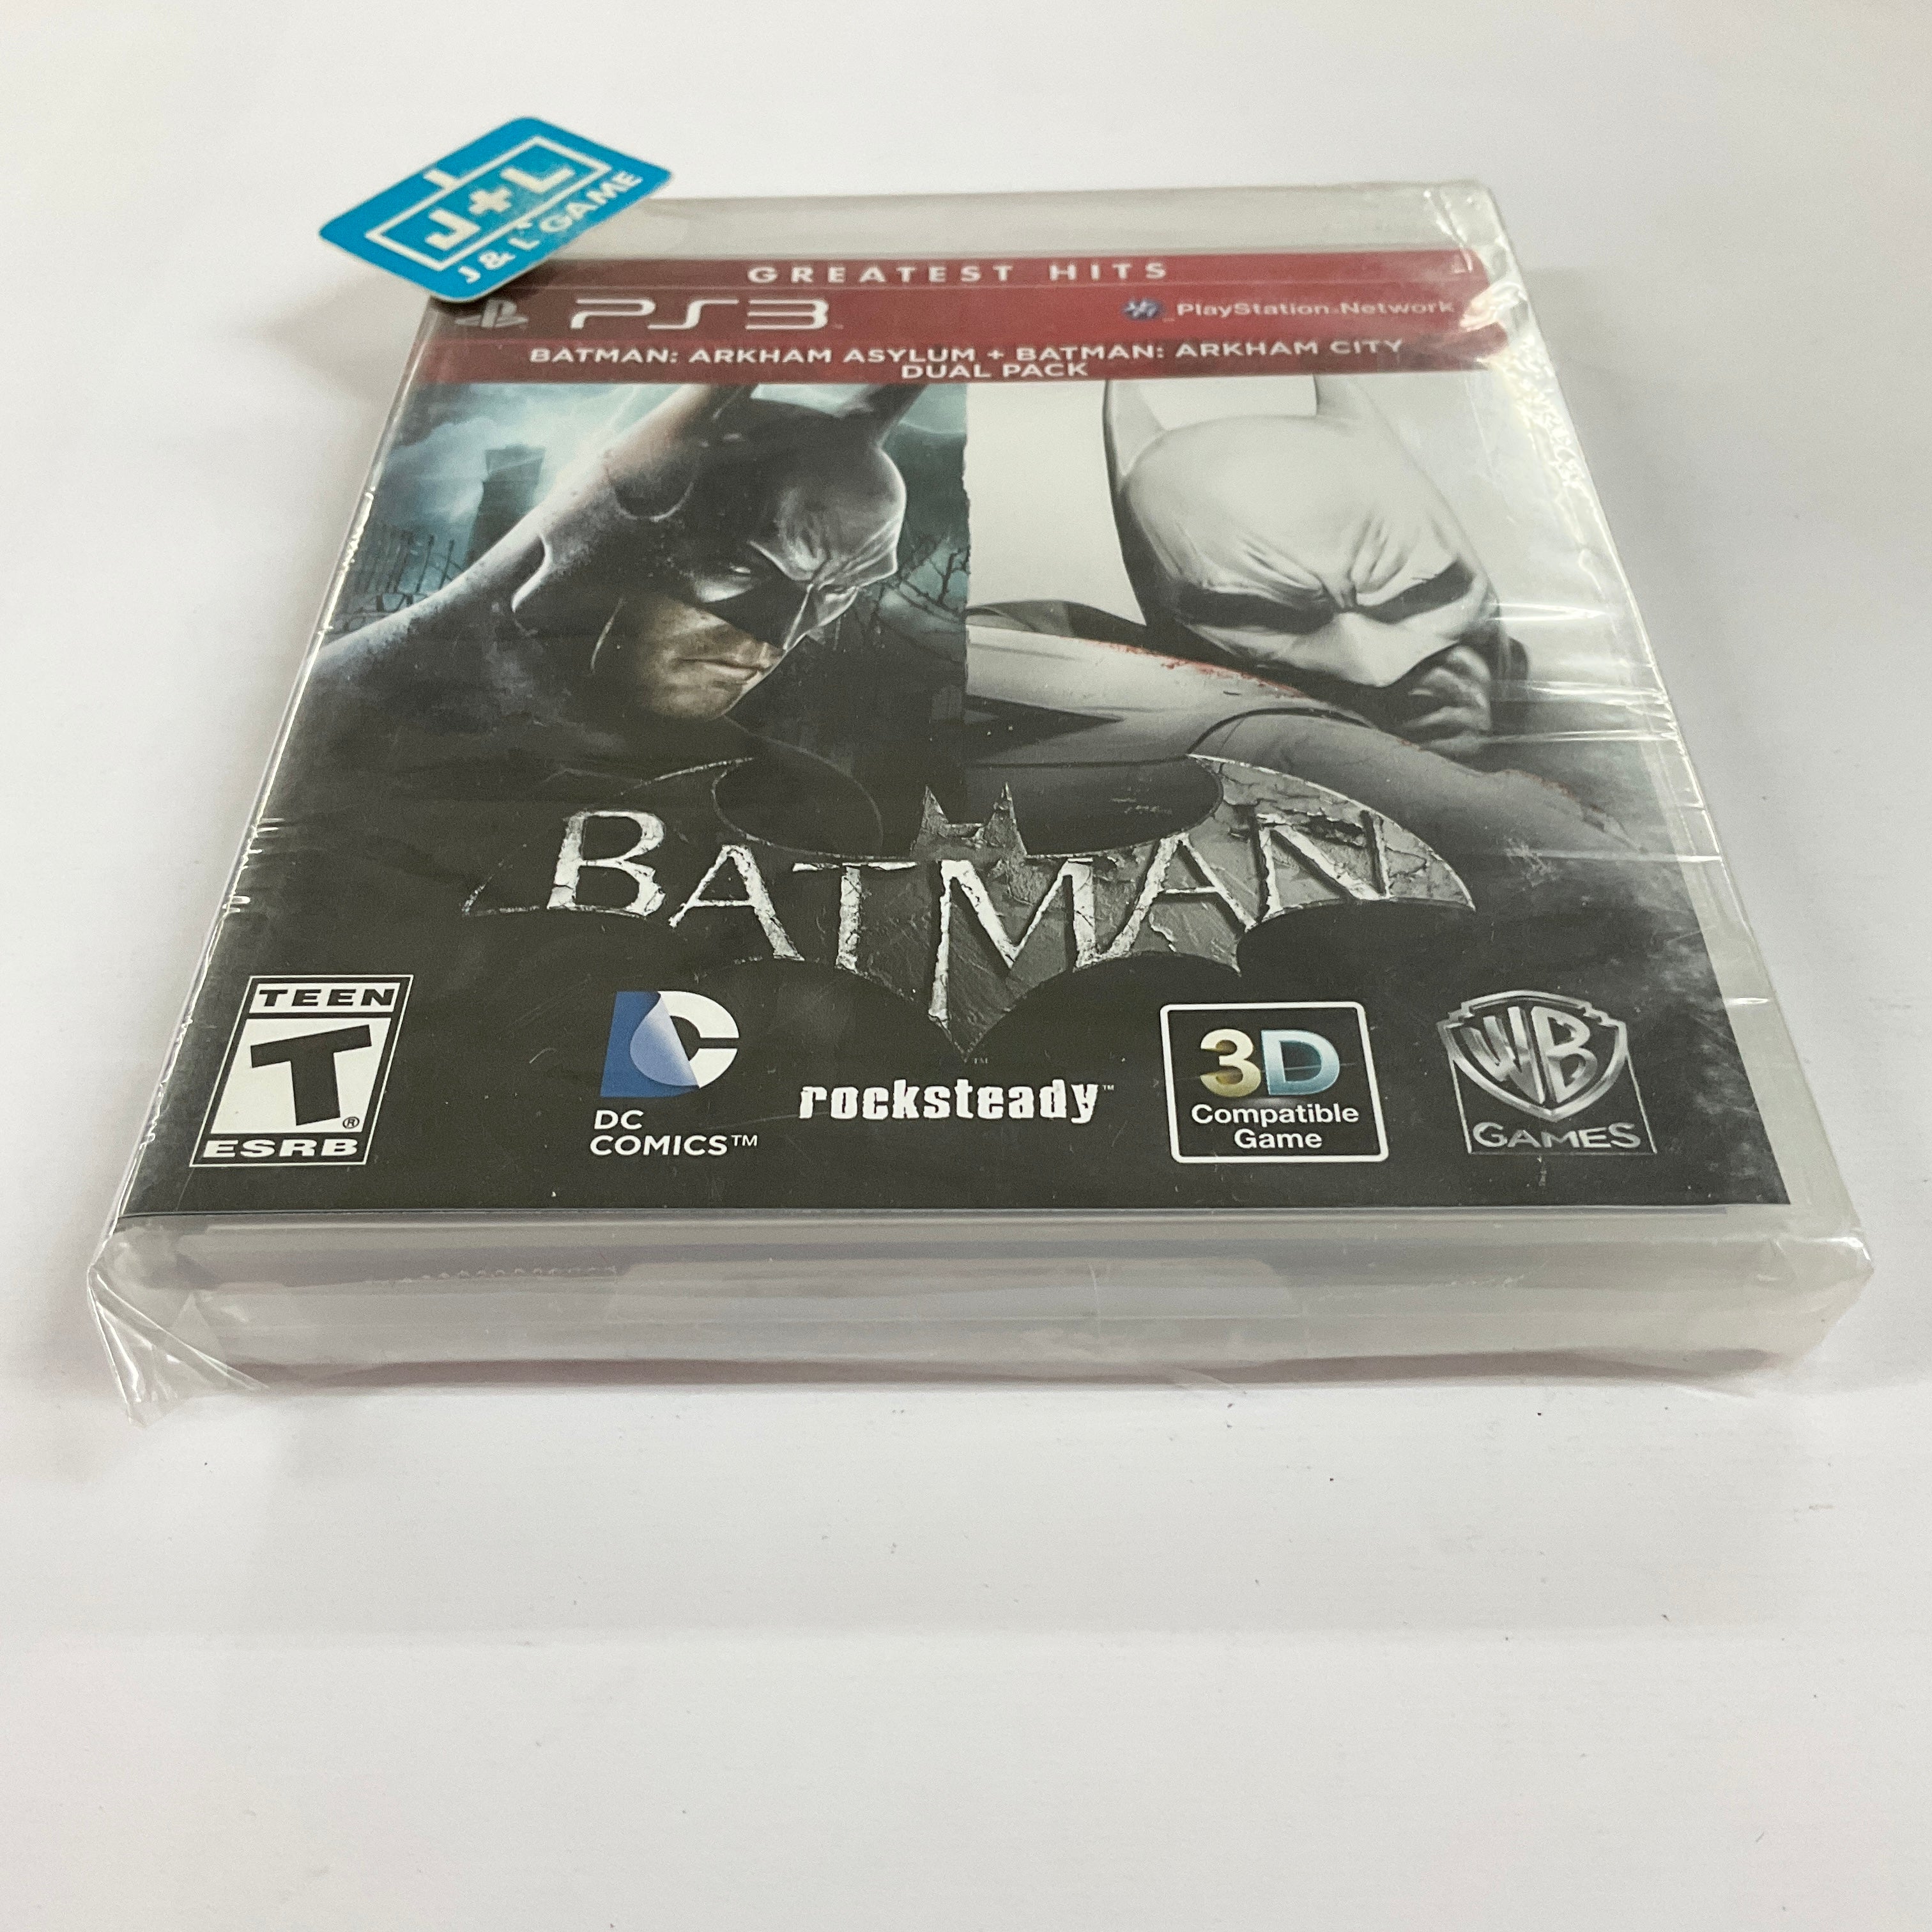 Batman: Arkham Asylum + Batman: Arkham City Dual Pack (Greatest Hits) - (PS3) Playstation 3 Video Games Warner Bros. Interactive Entertainment   